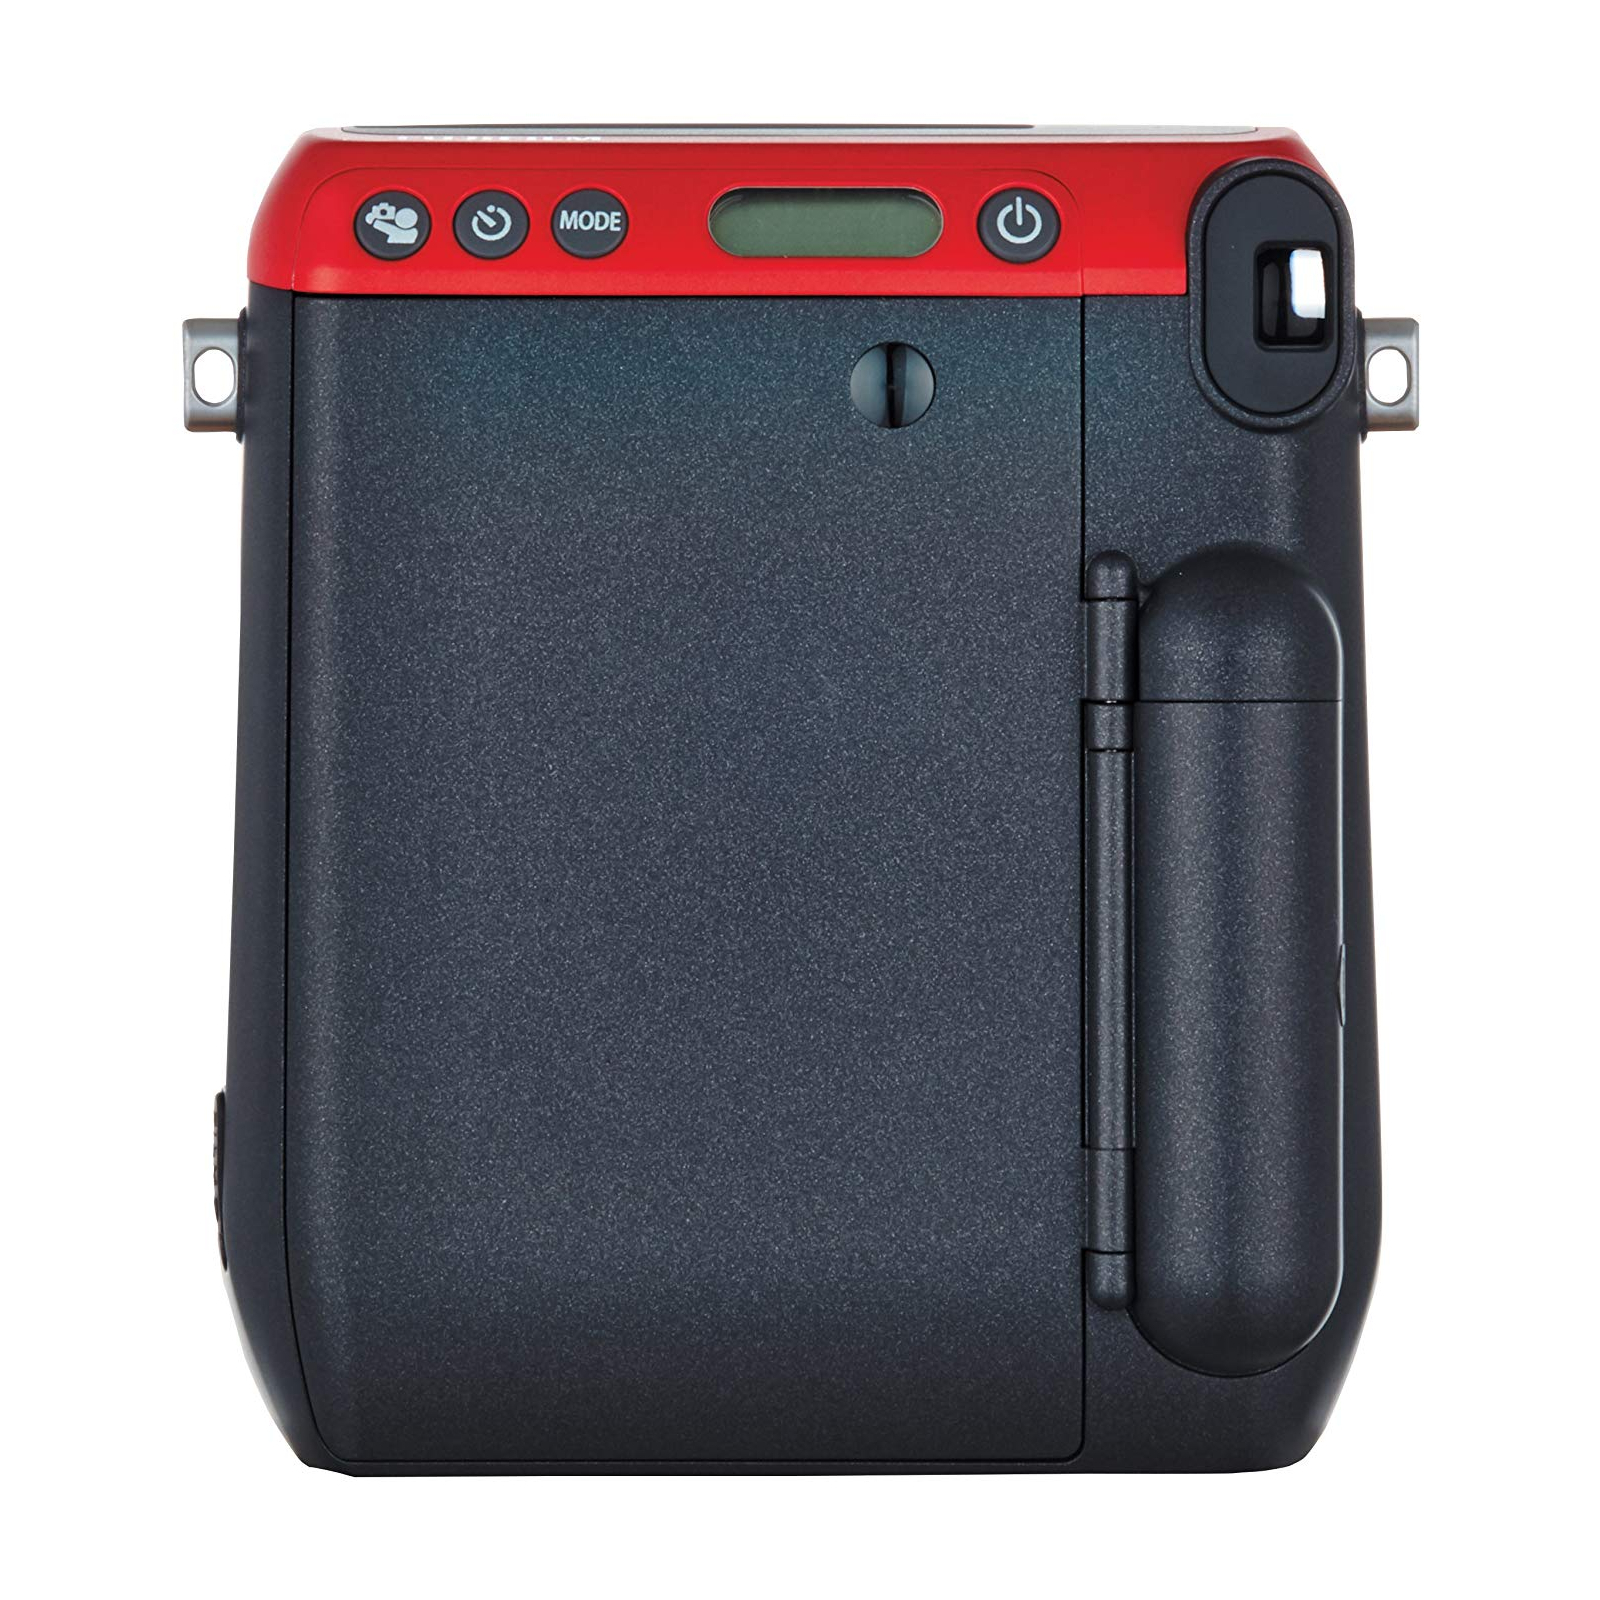 Камера моментальной печати Fujifilm Instax Mini 70 Passion Red (16513889) изображение 5